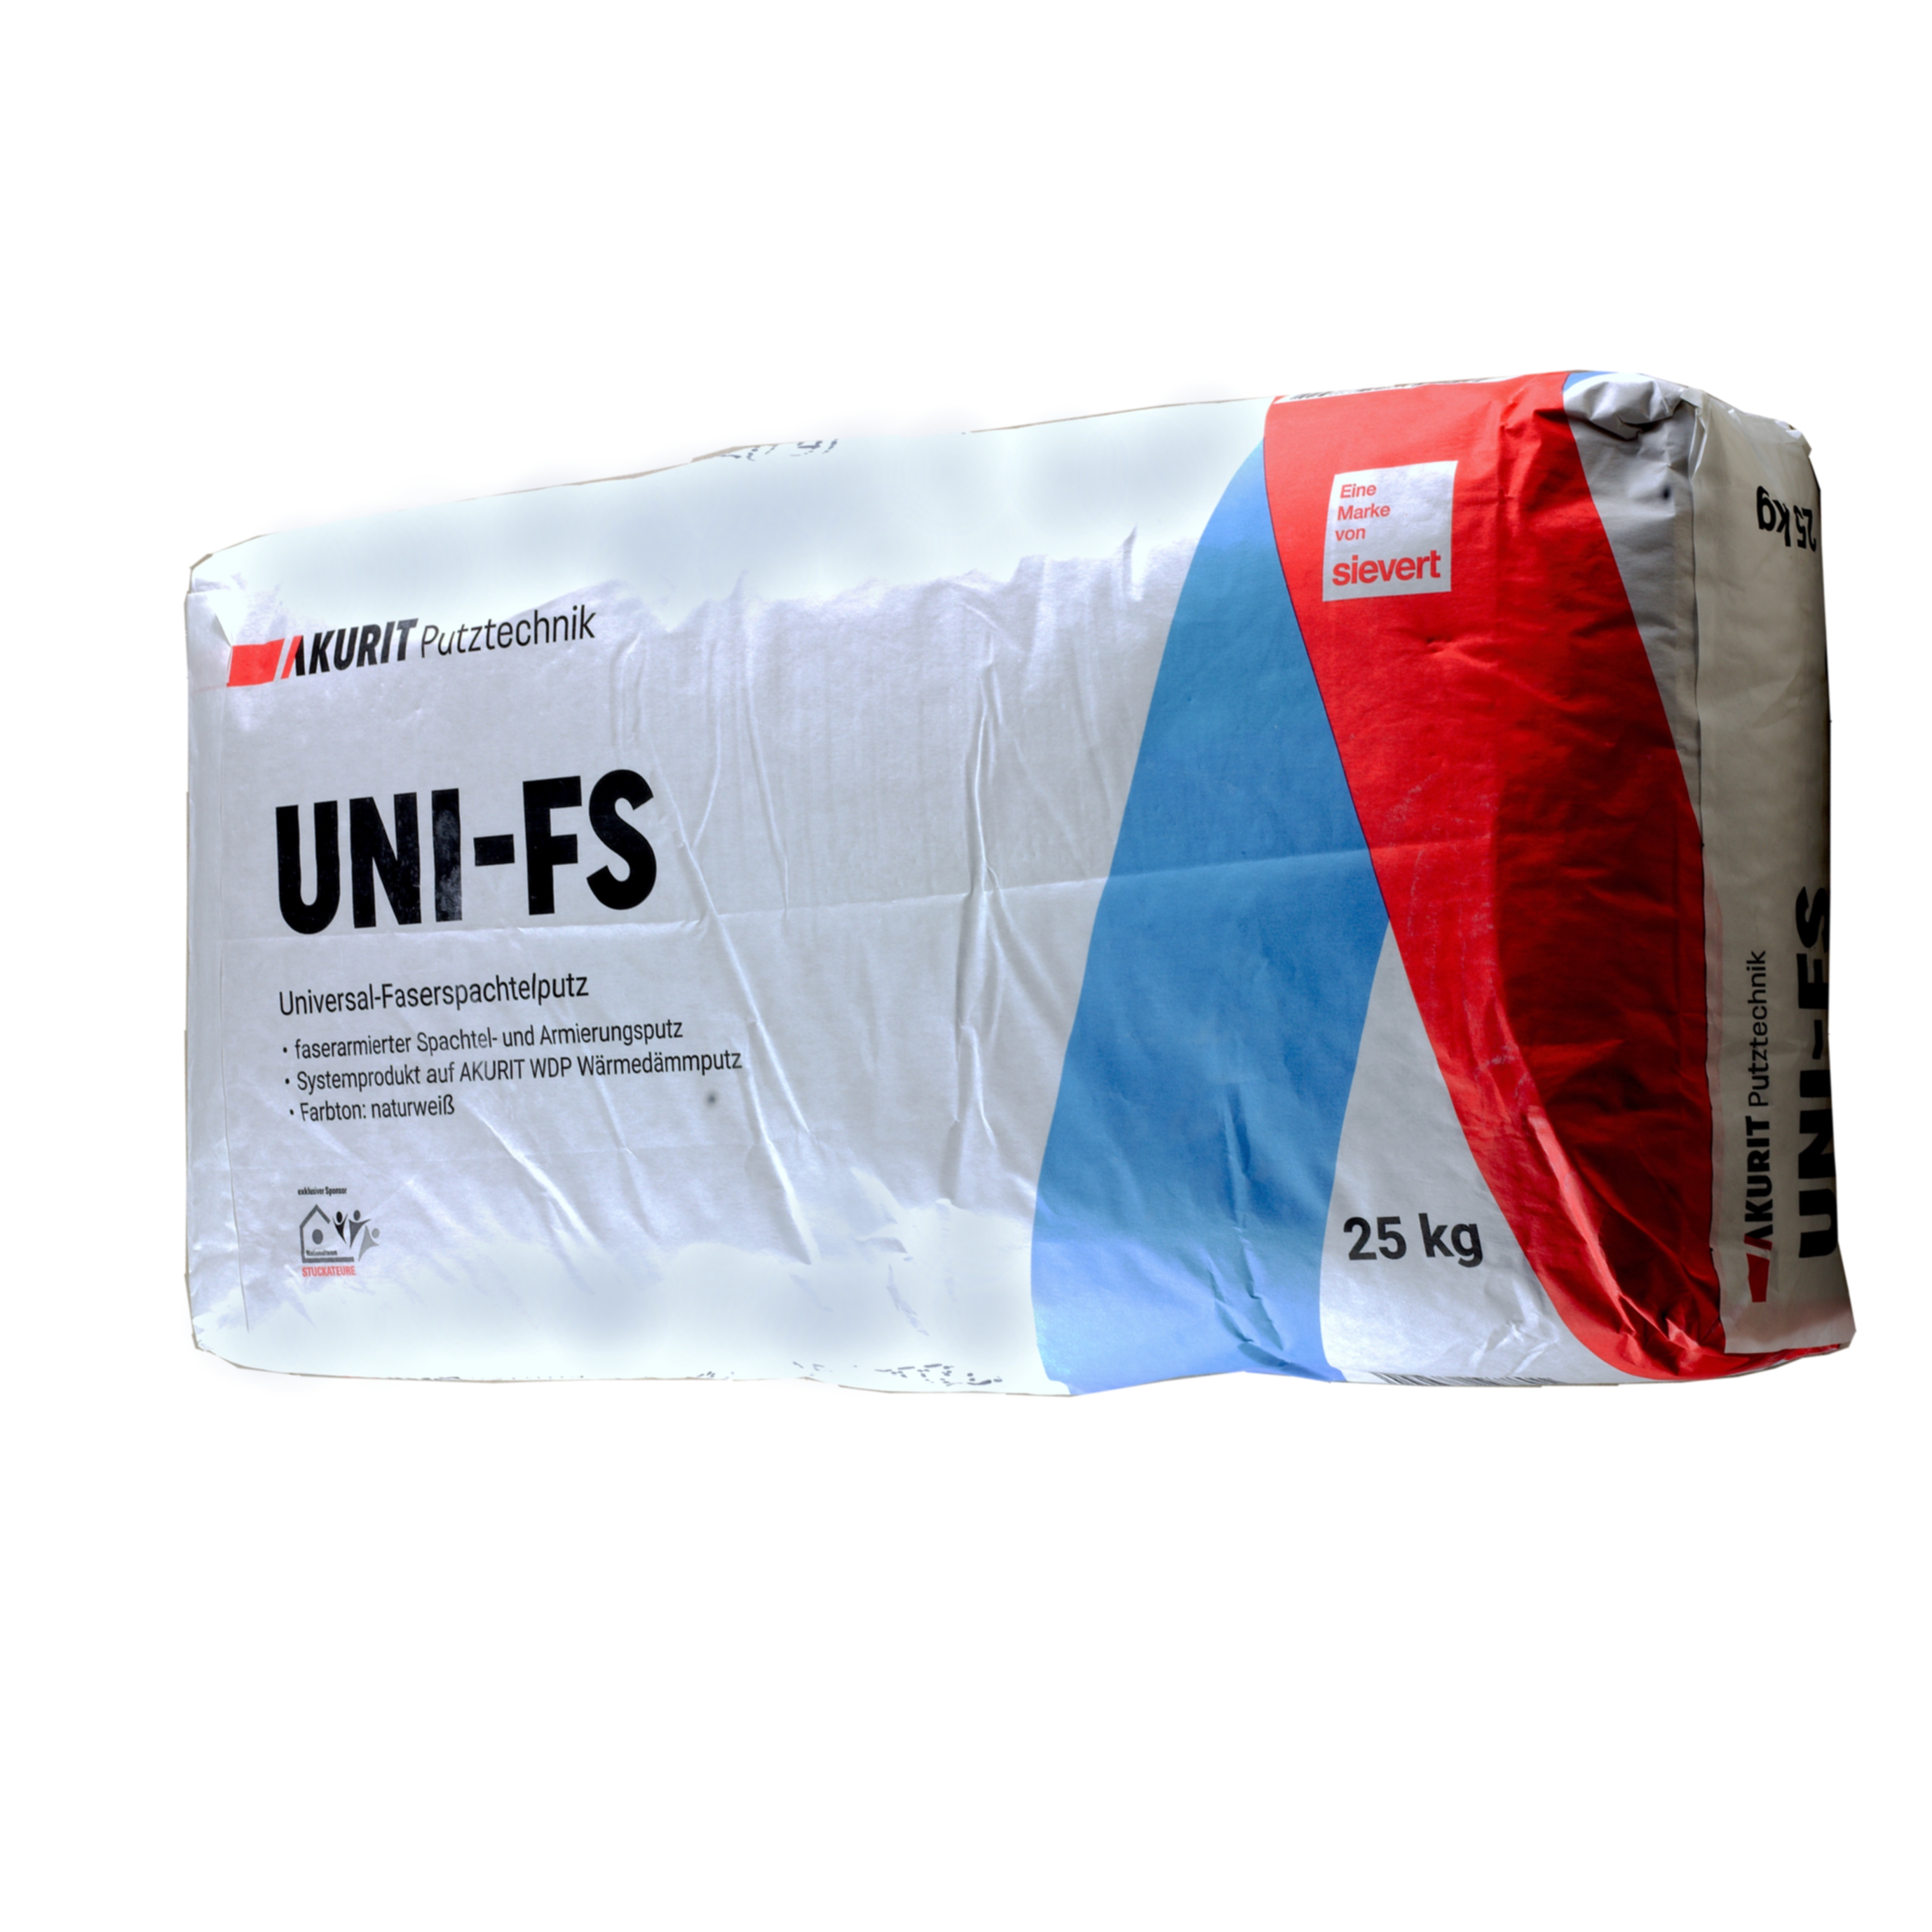 Akurit UNI-FS Faserrenovierputz  25 kg